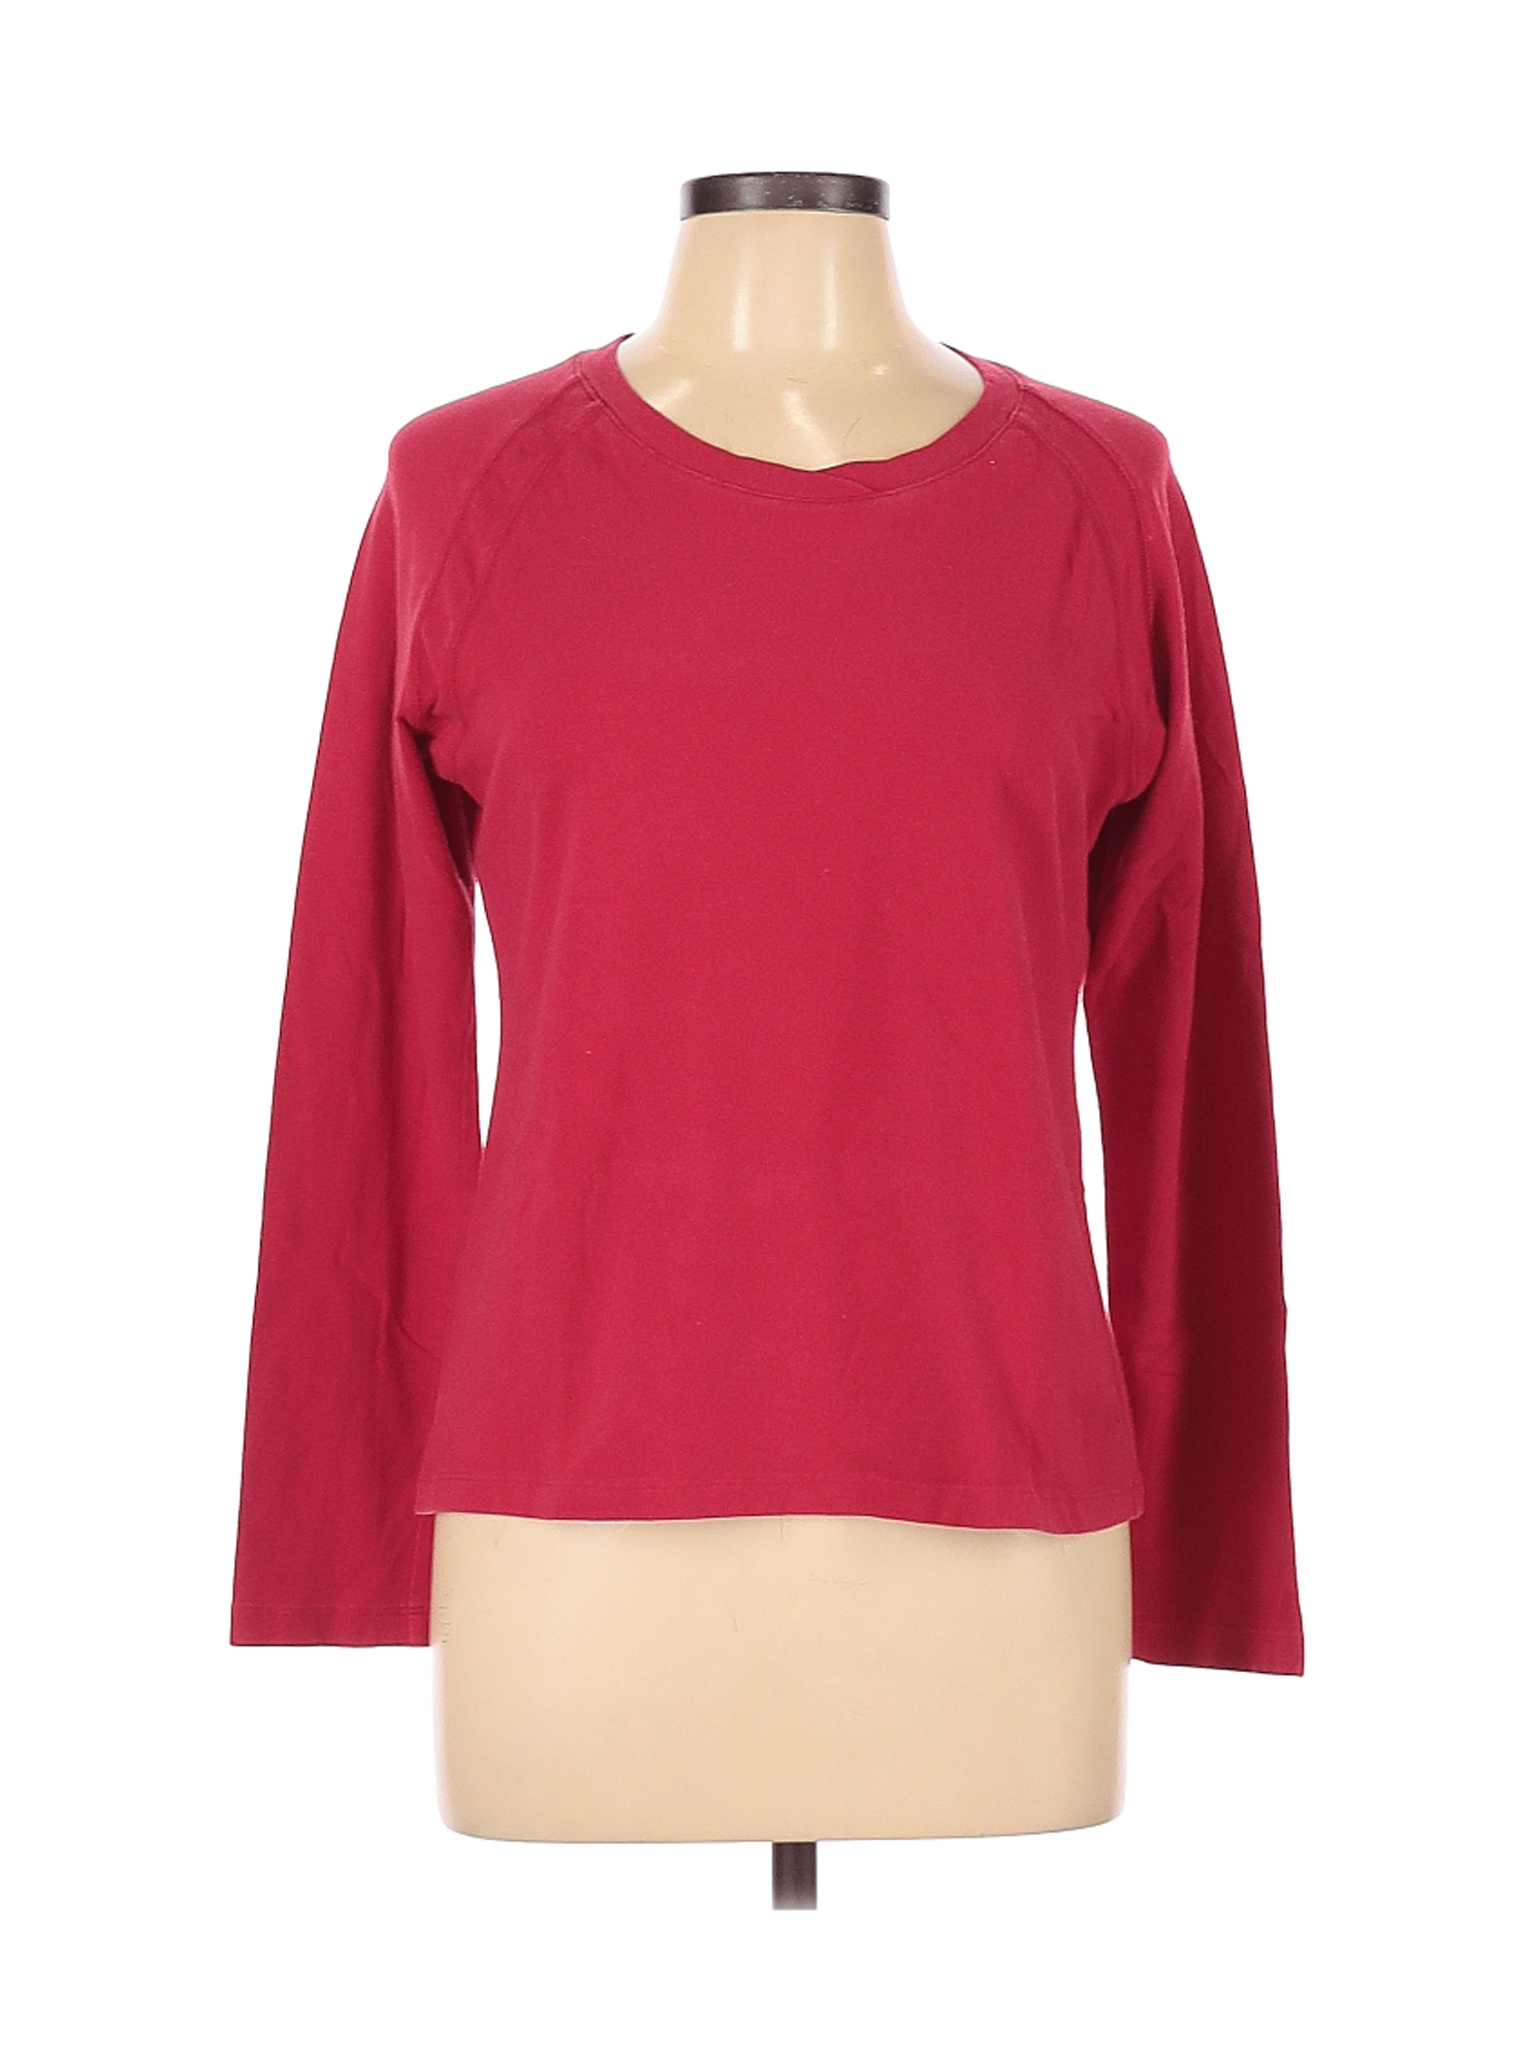 Danskin Now Women Red Long Sleeve T-Shirt L | eBay